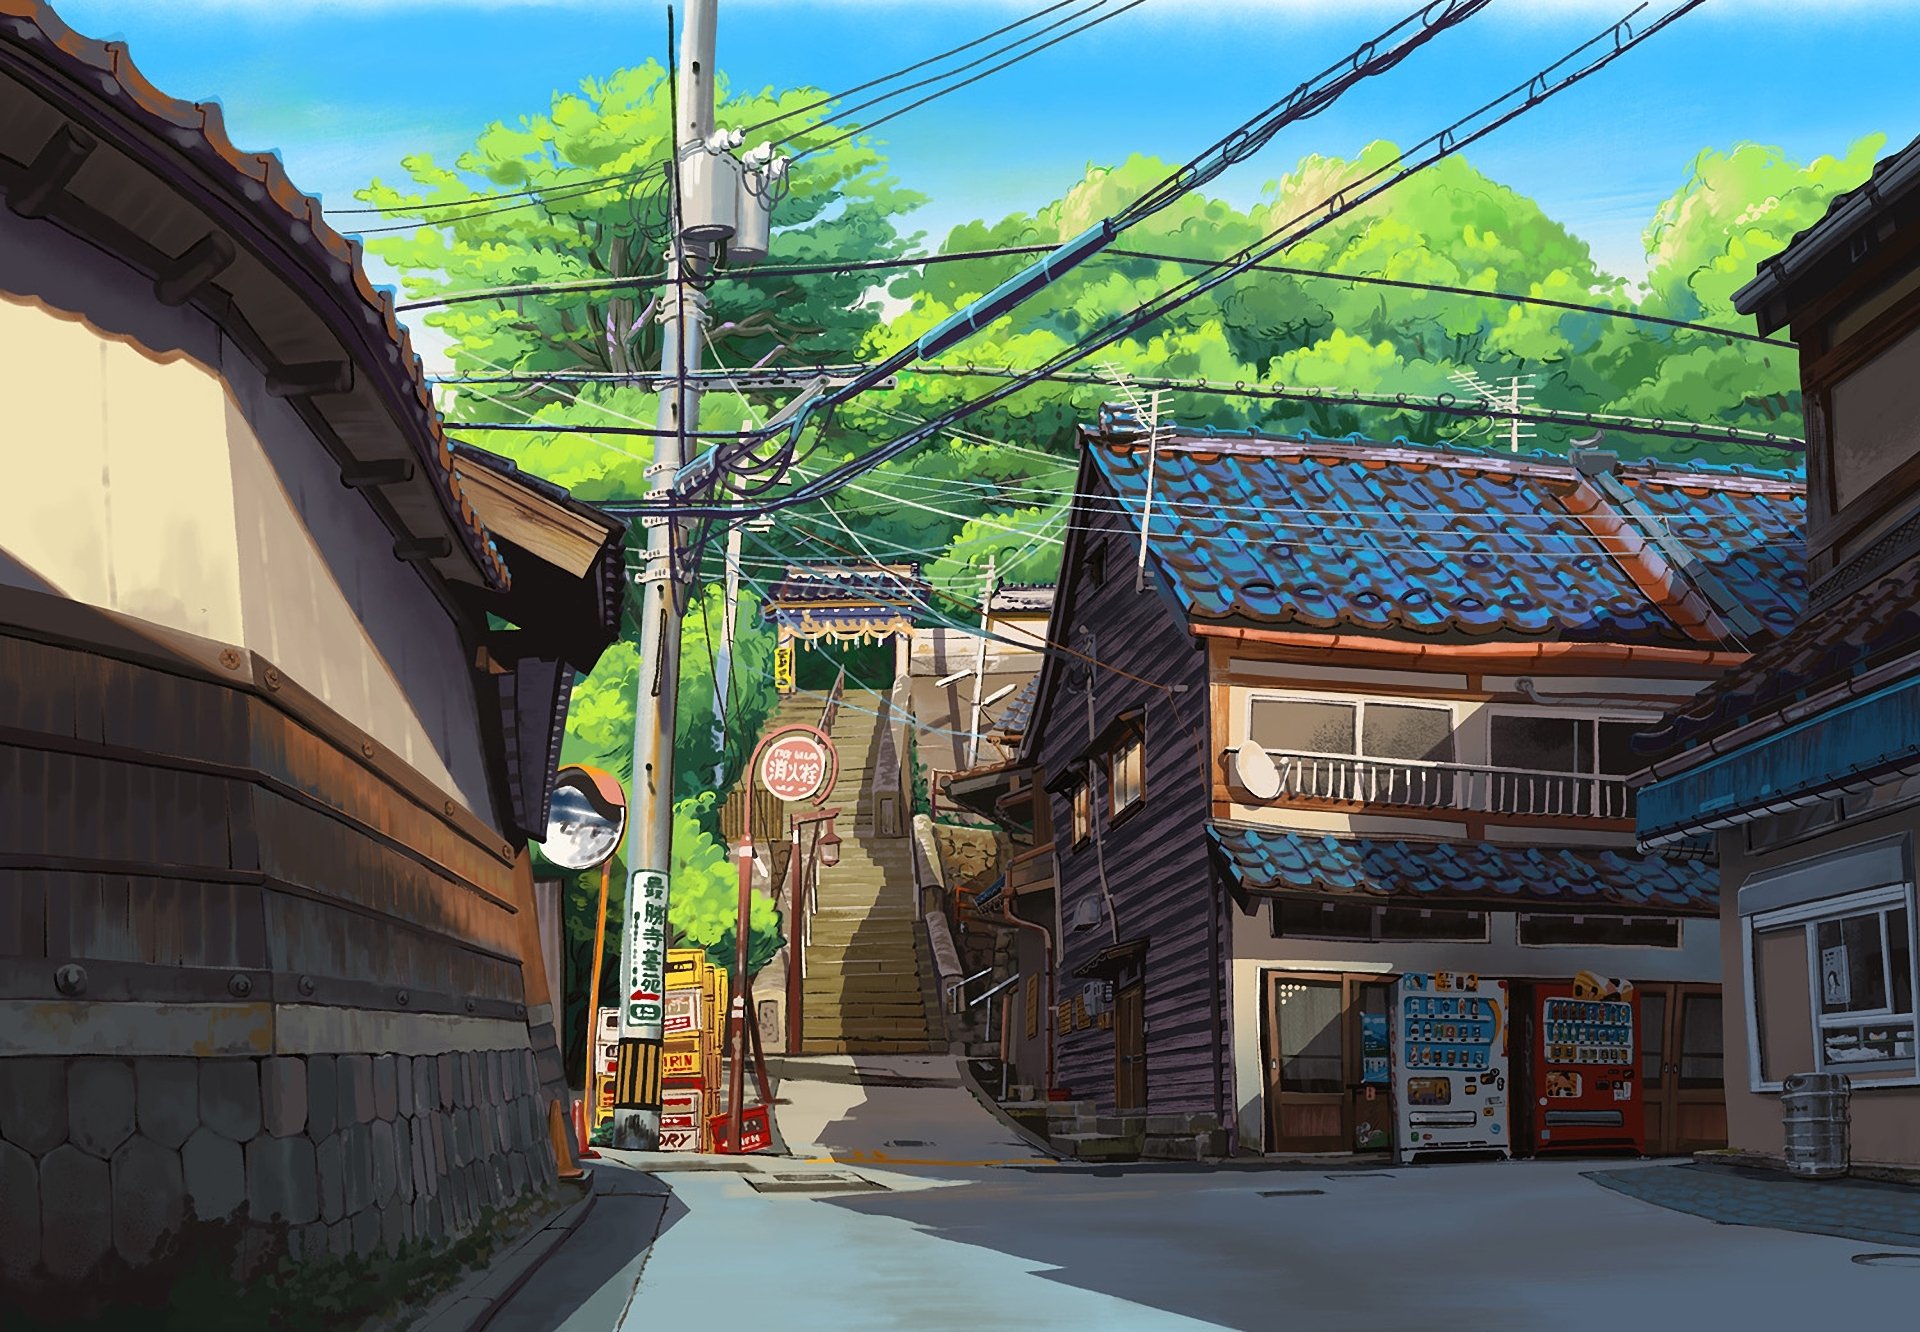 Japanese fora. Хинамидзава деревня в Японии арт. Деревня Сиракава Япония арт. Япония Киото деревня. Япония глубинка Токио.